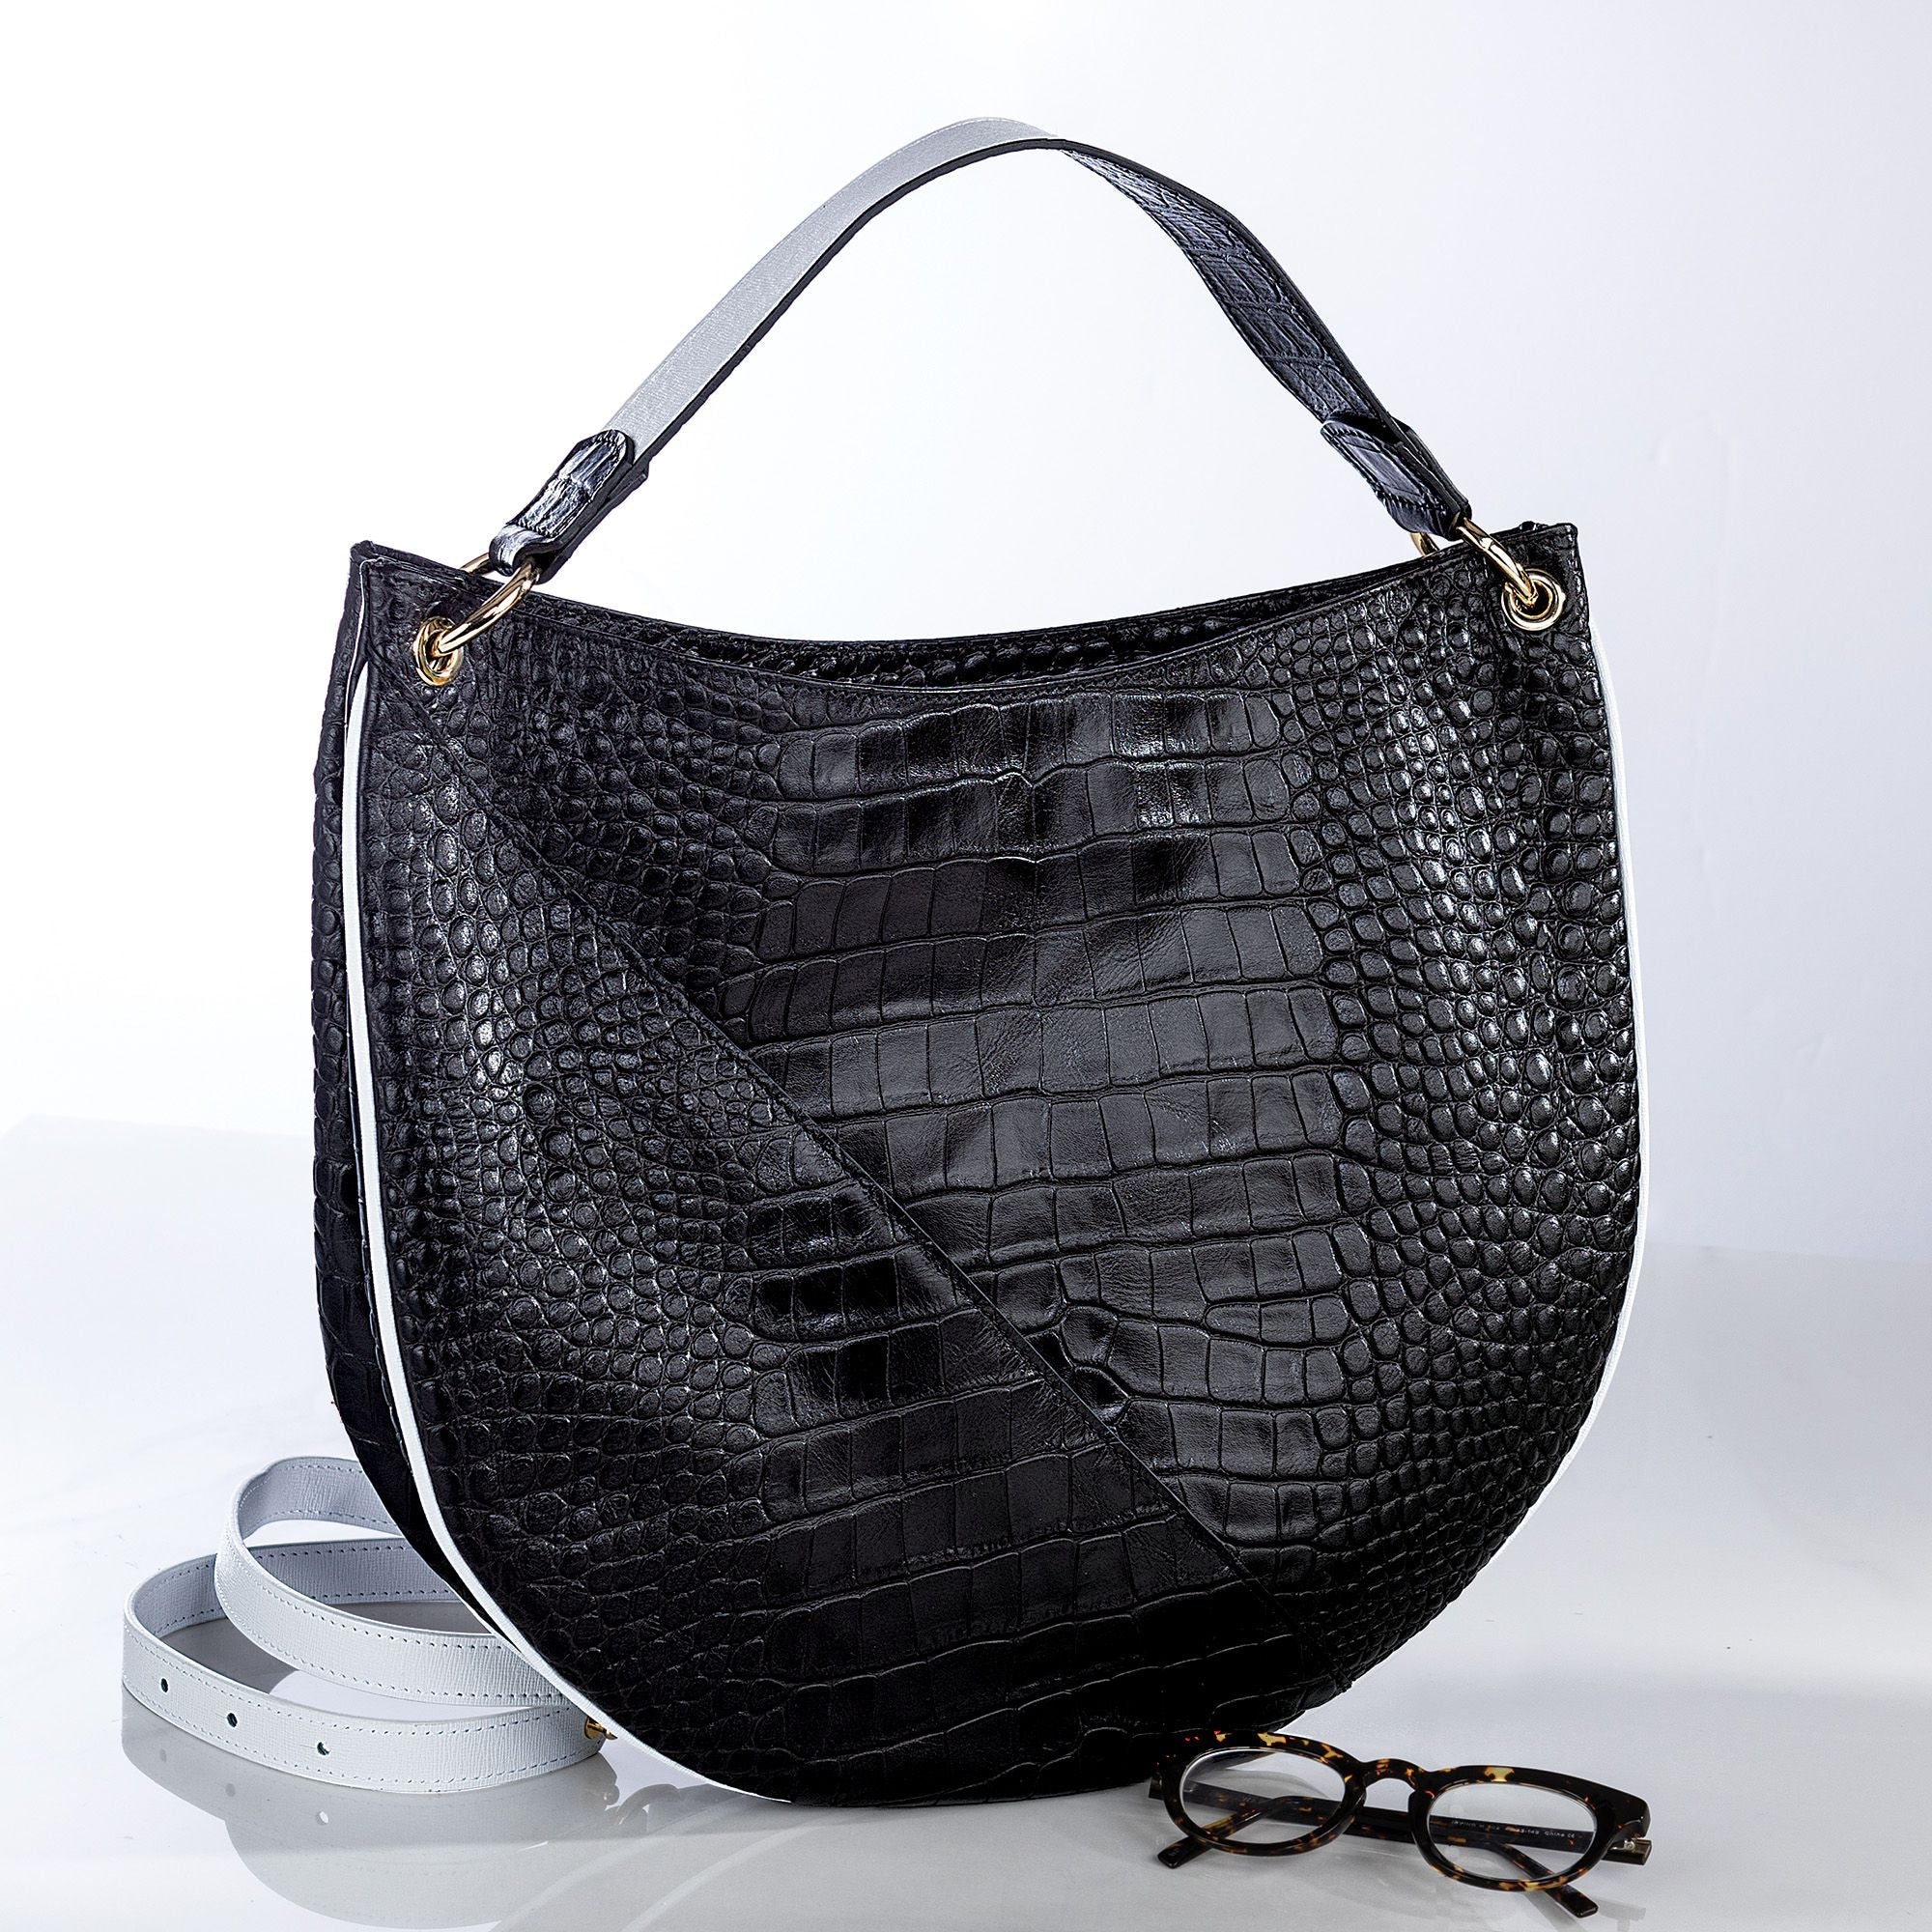 Sassari Black & White Italian Leather Handbag